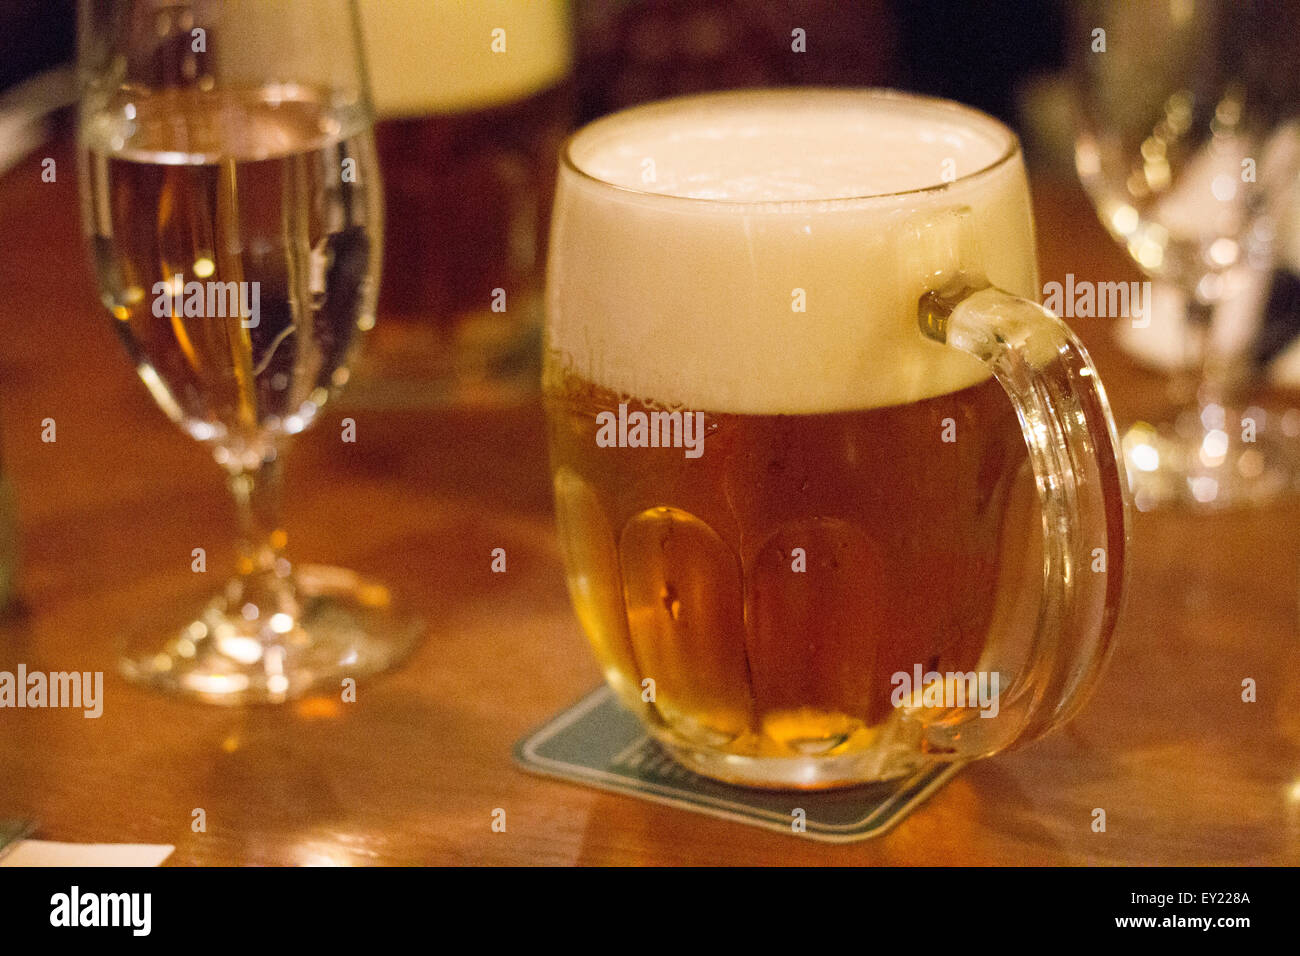 Czech beer Stock Photo